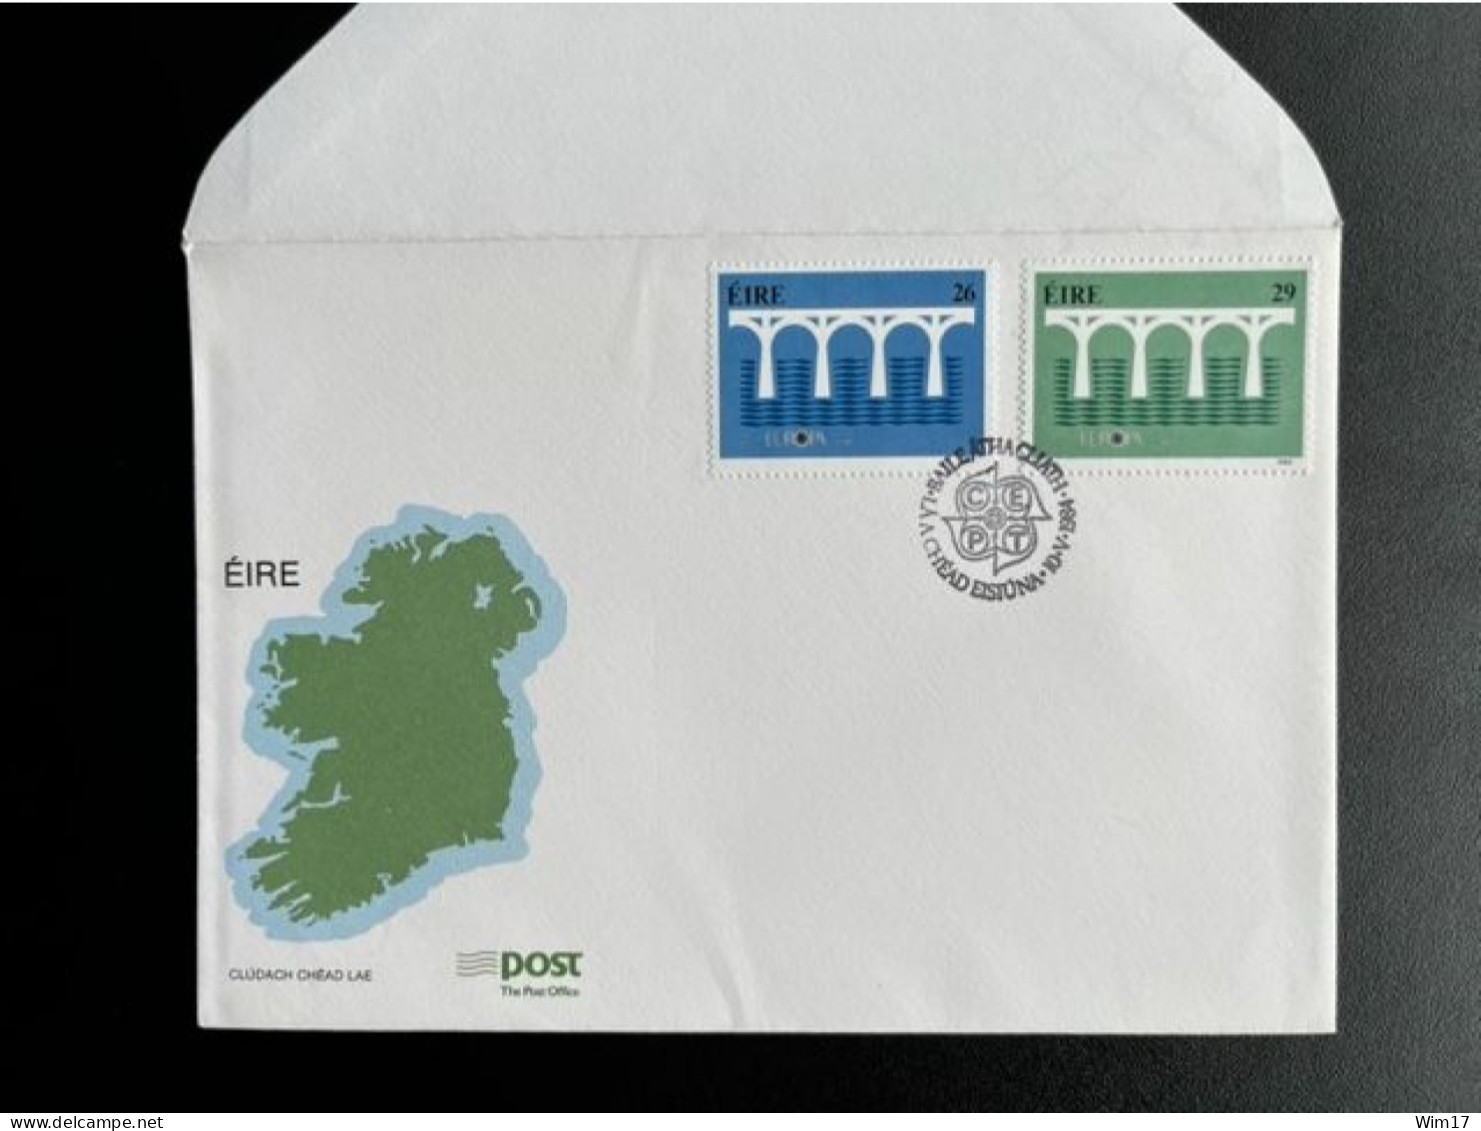 IRELAND 1984 FDC EUROPA CEPT EUROPEAN ELECTIONS IERLAND EIRE - FDC